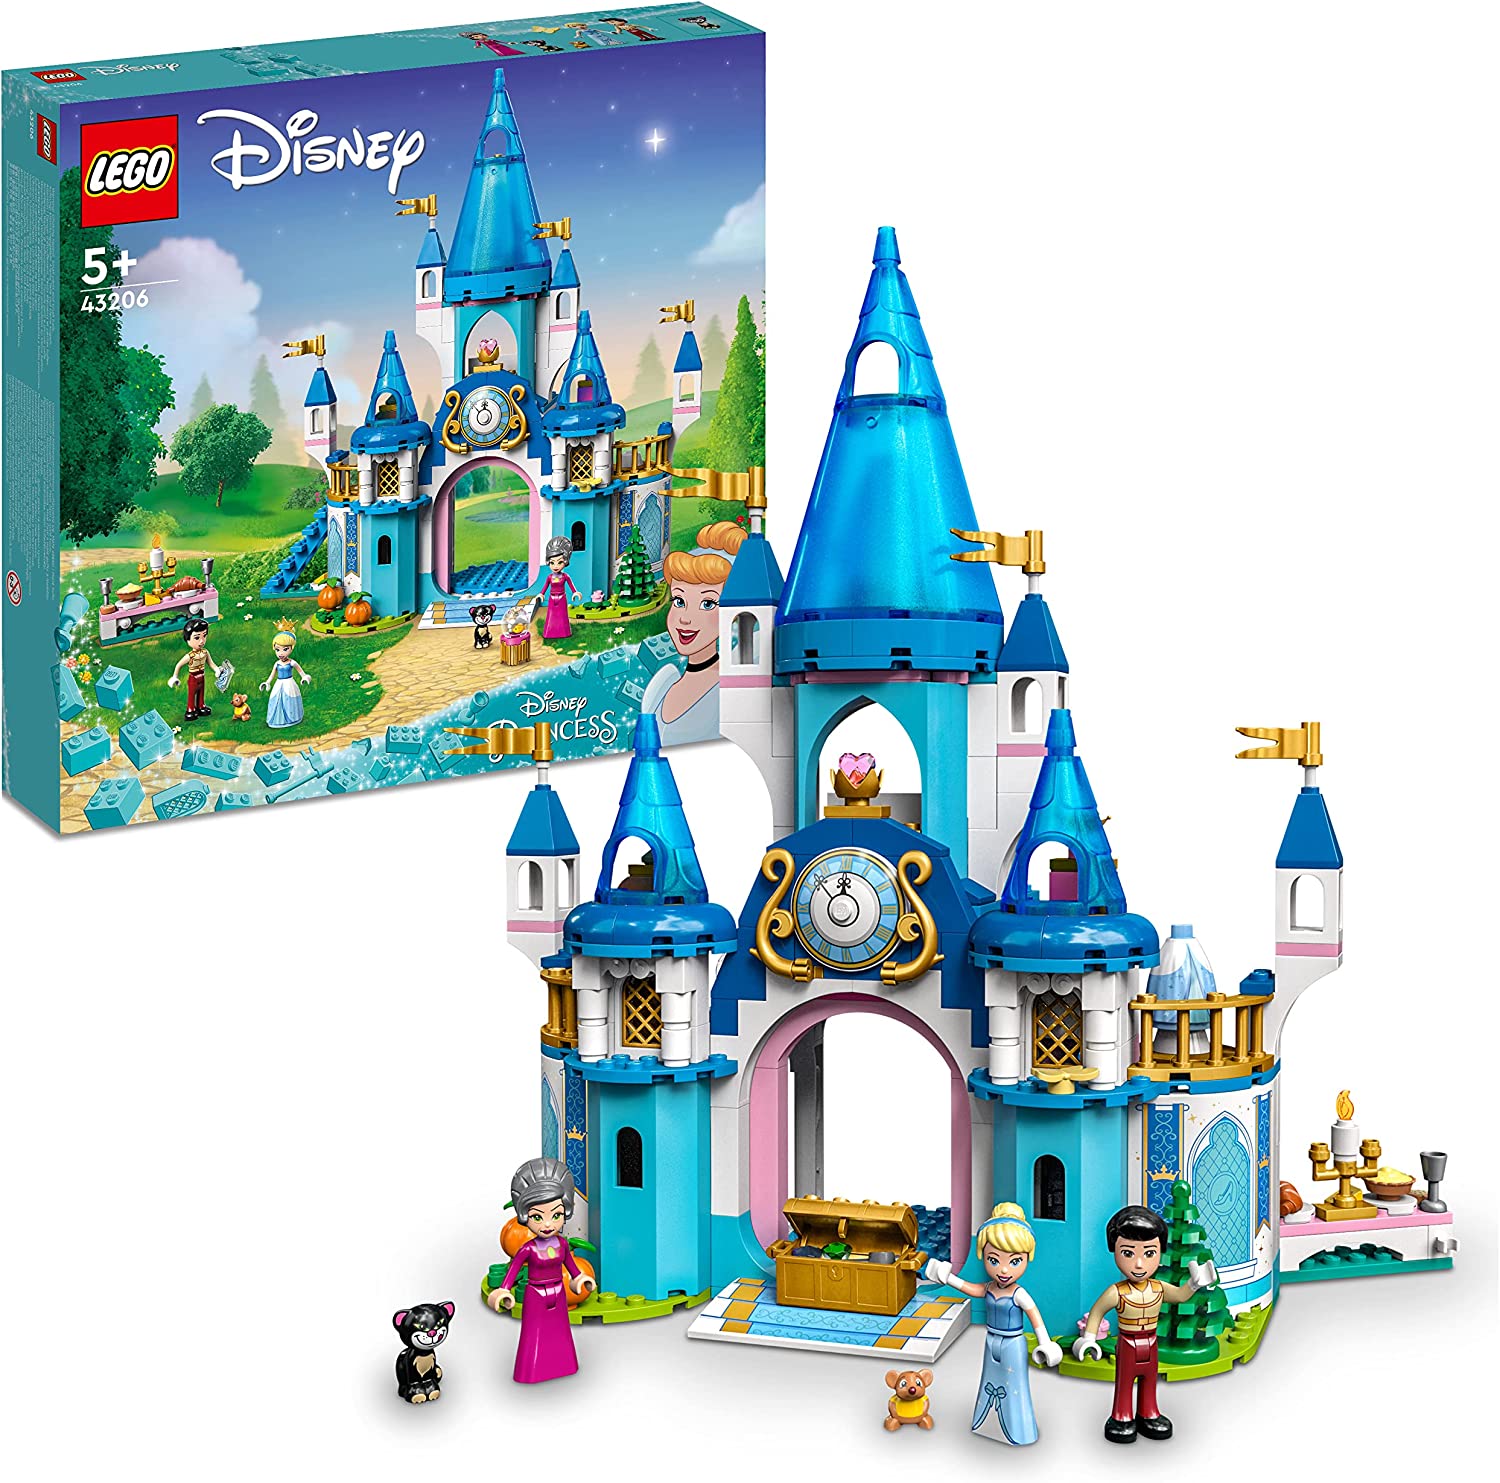 LEGO 43206 Disney Princess Cinderella\'s Castle Building Toy with 3 Mini Dolls, Dollhouse with Princess Cinderella